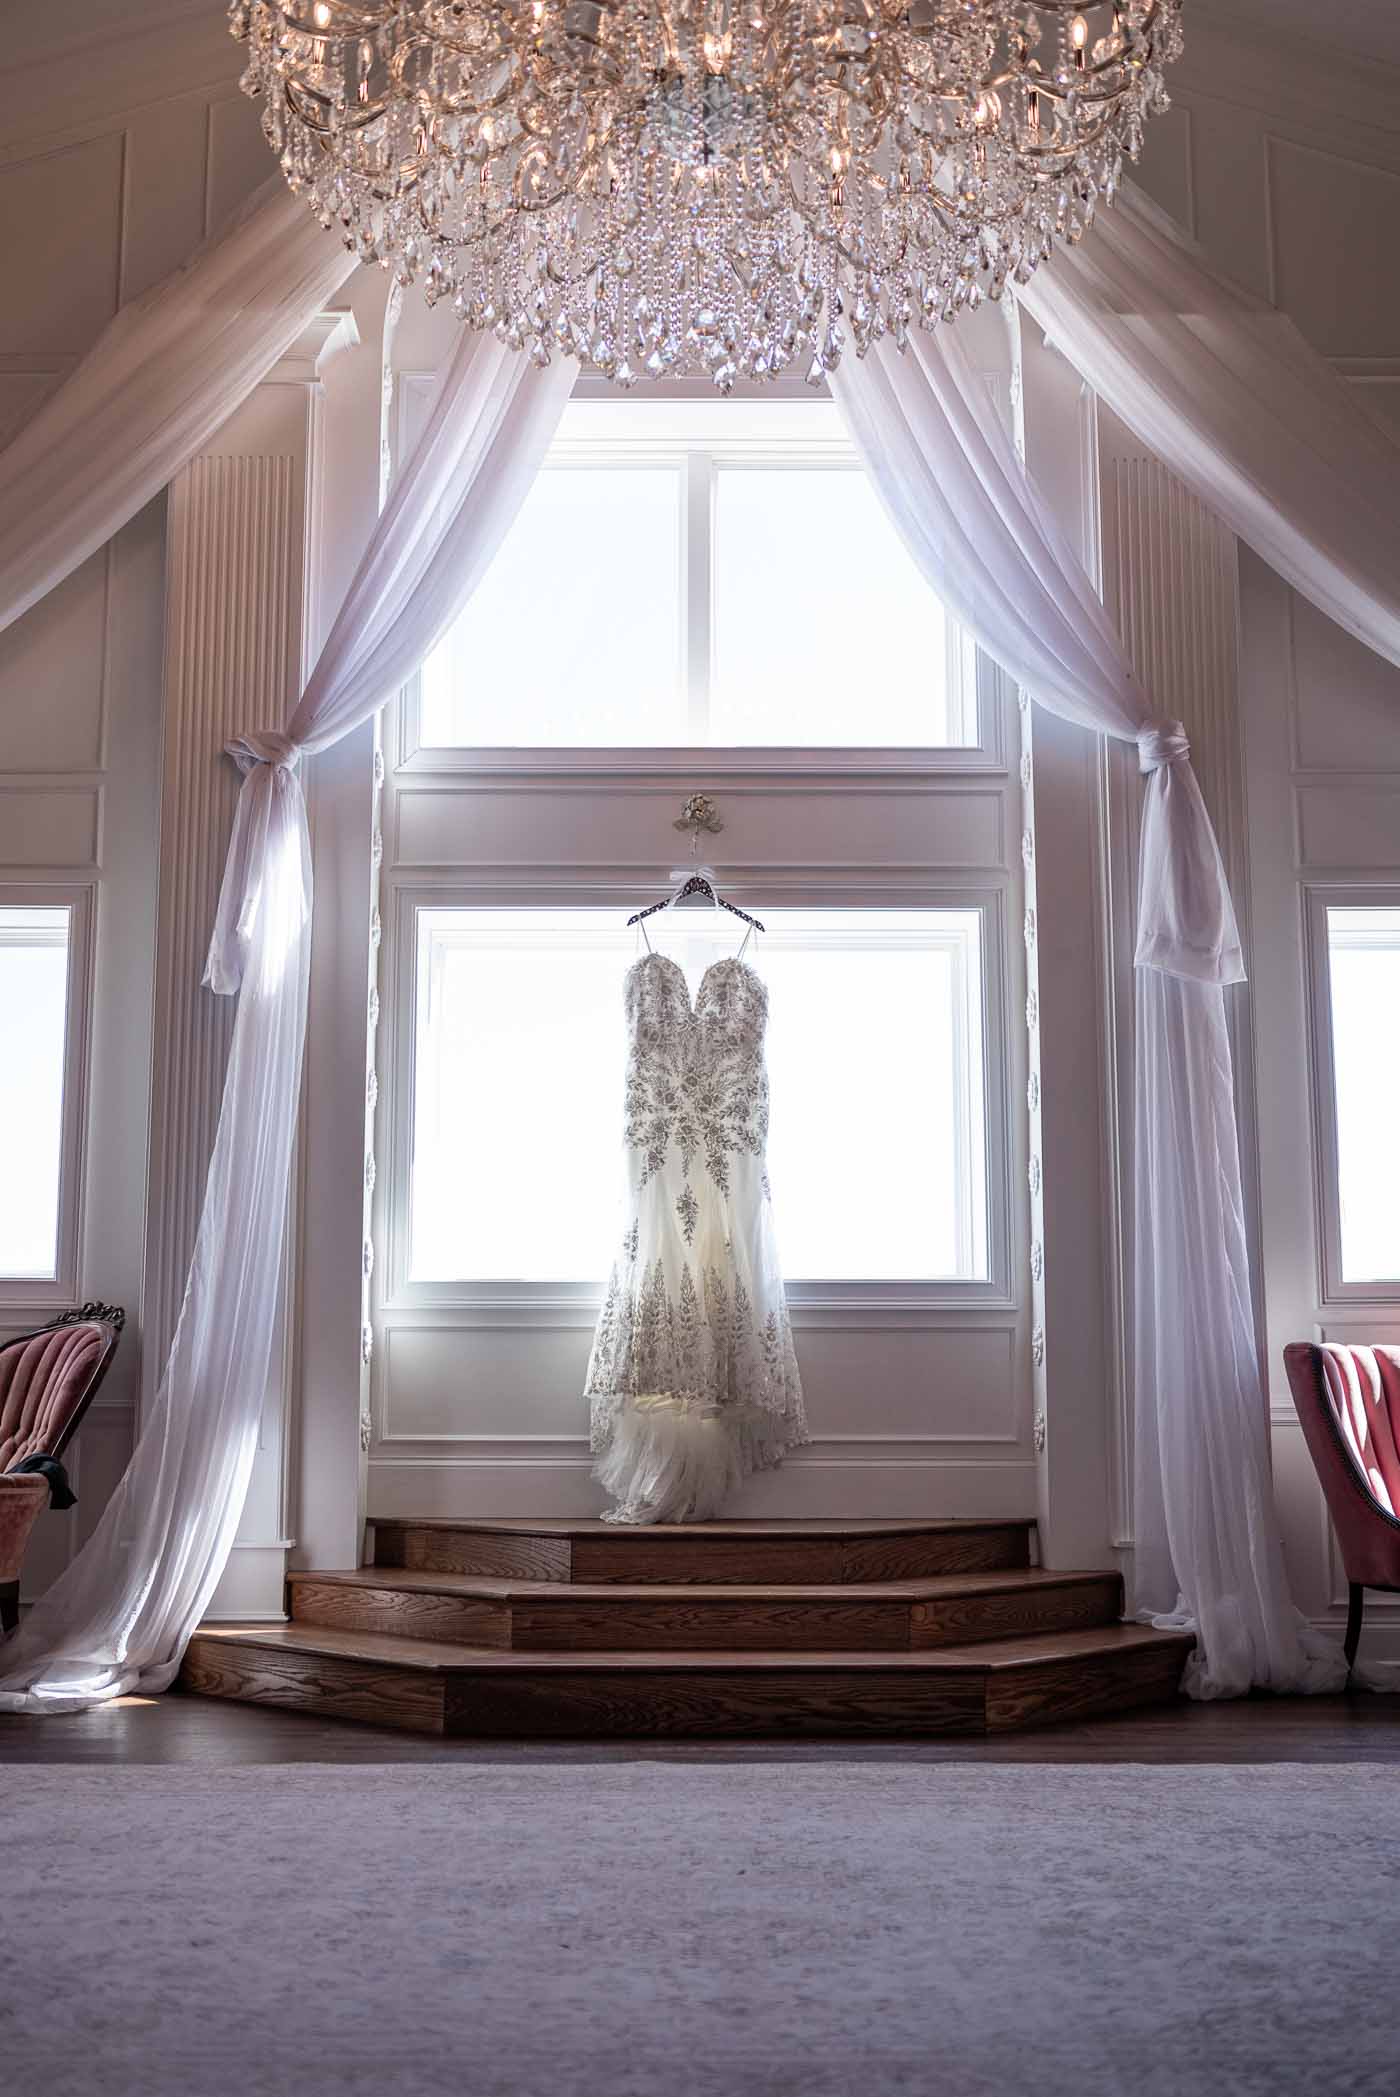 Dress hanging in window